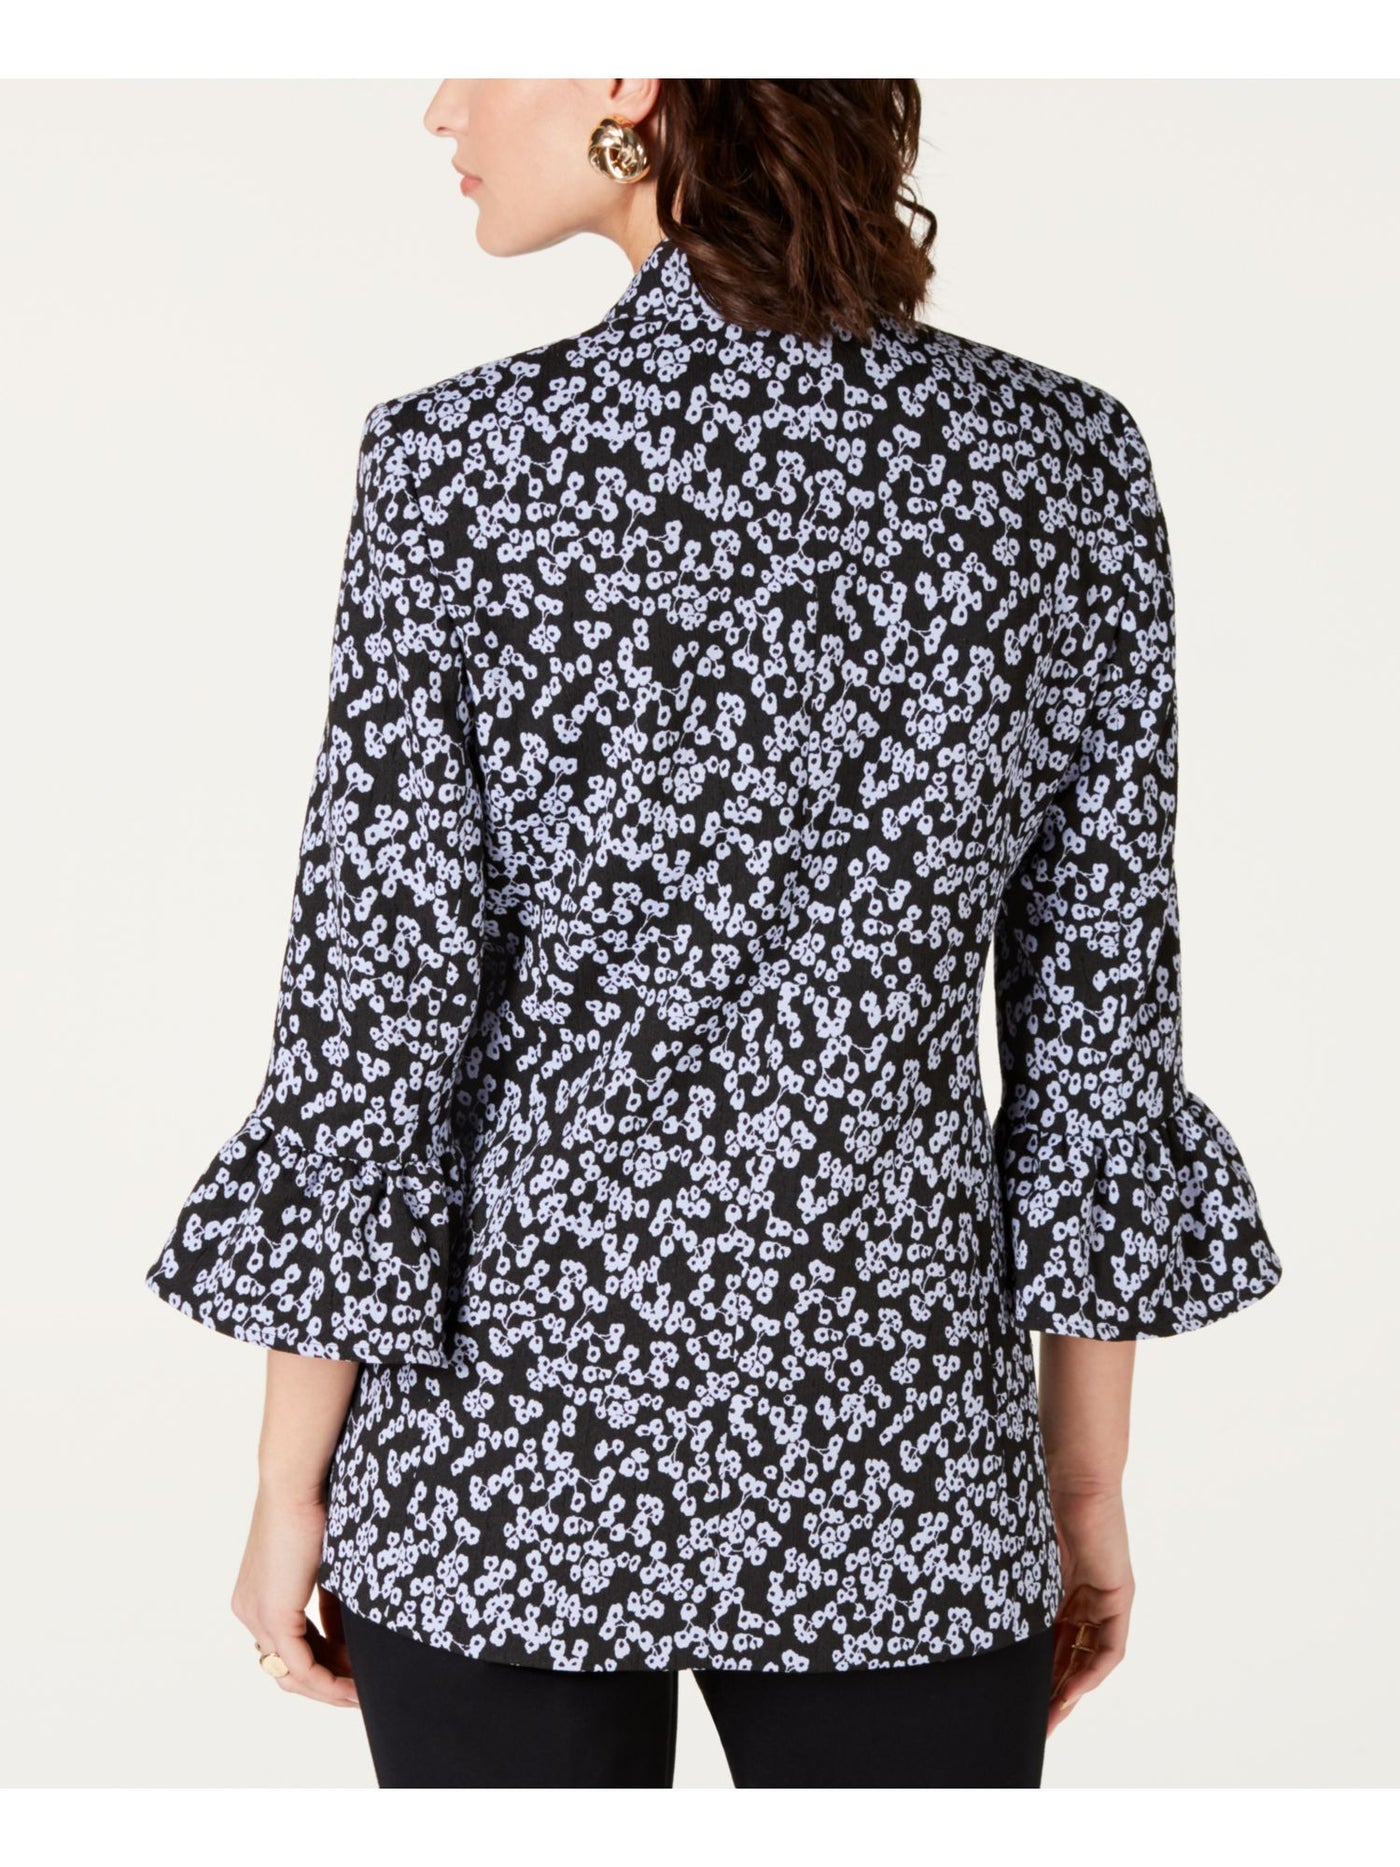 NINE WEST Womens Black Ruffled Bell-sleeve Floral Jacket Size: 16